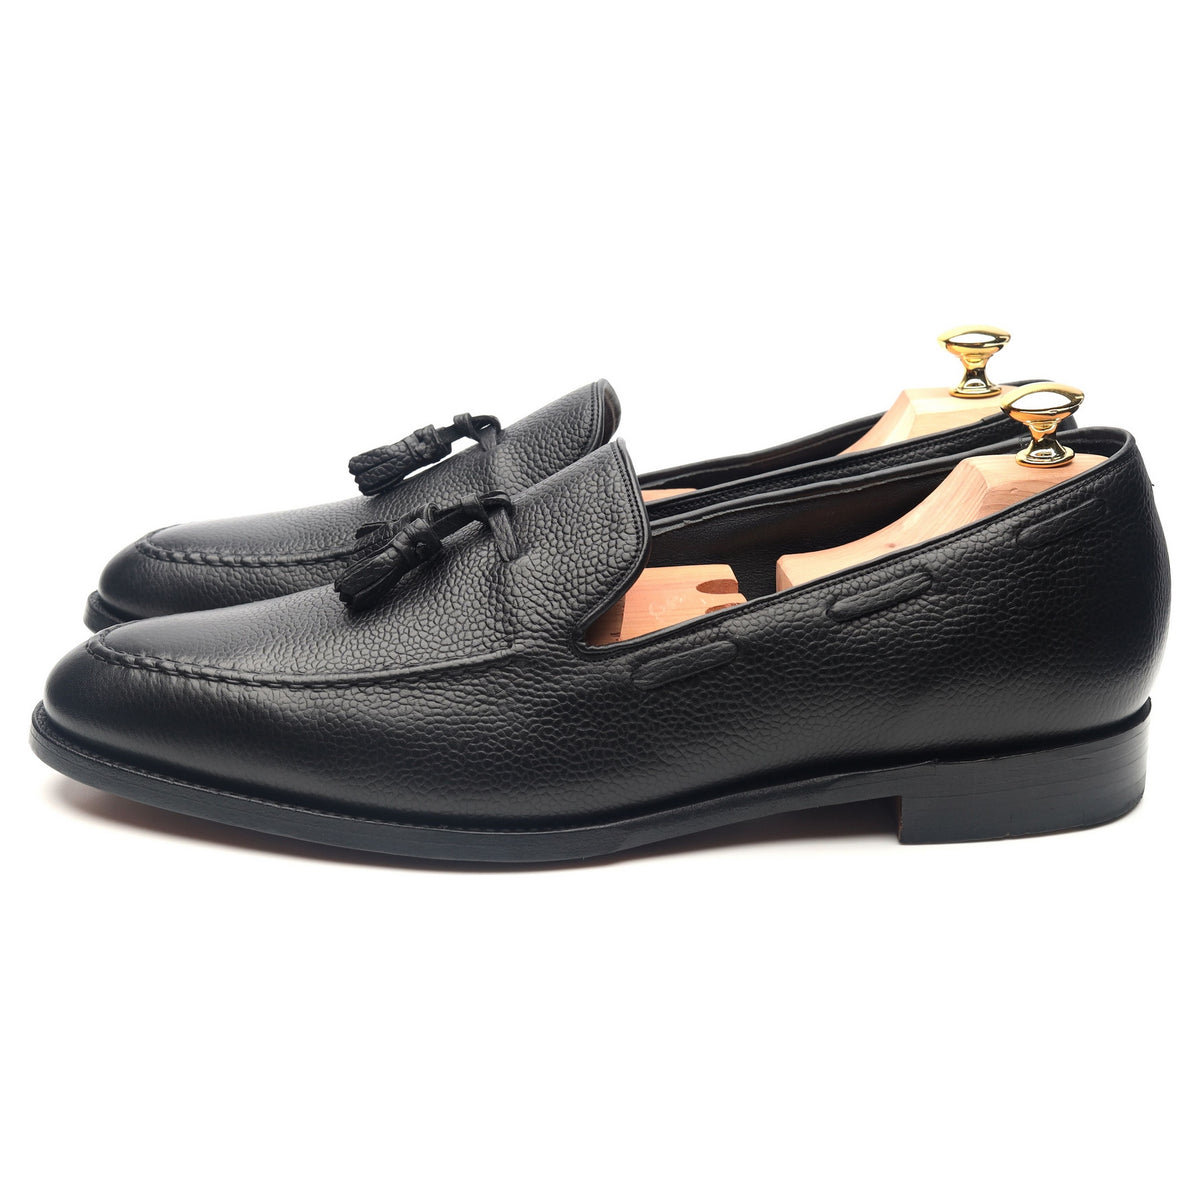 Newborough' Black Leather Tassel Loafers UK 11.5 F - Abbot's Shoes